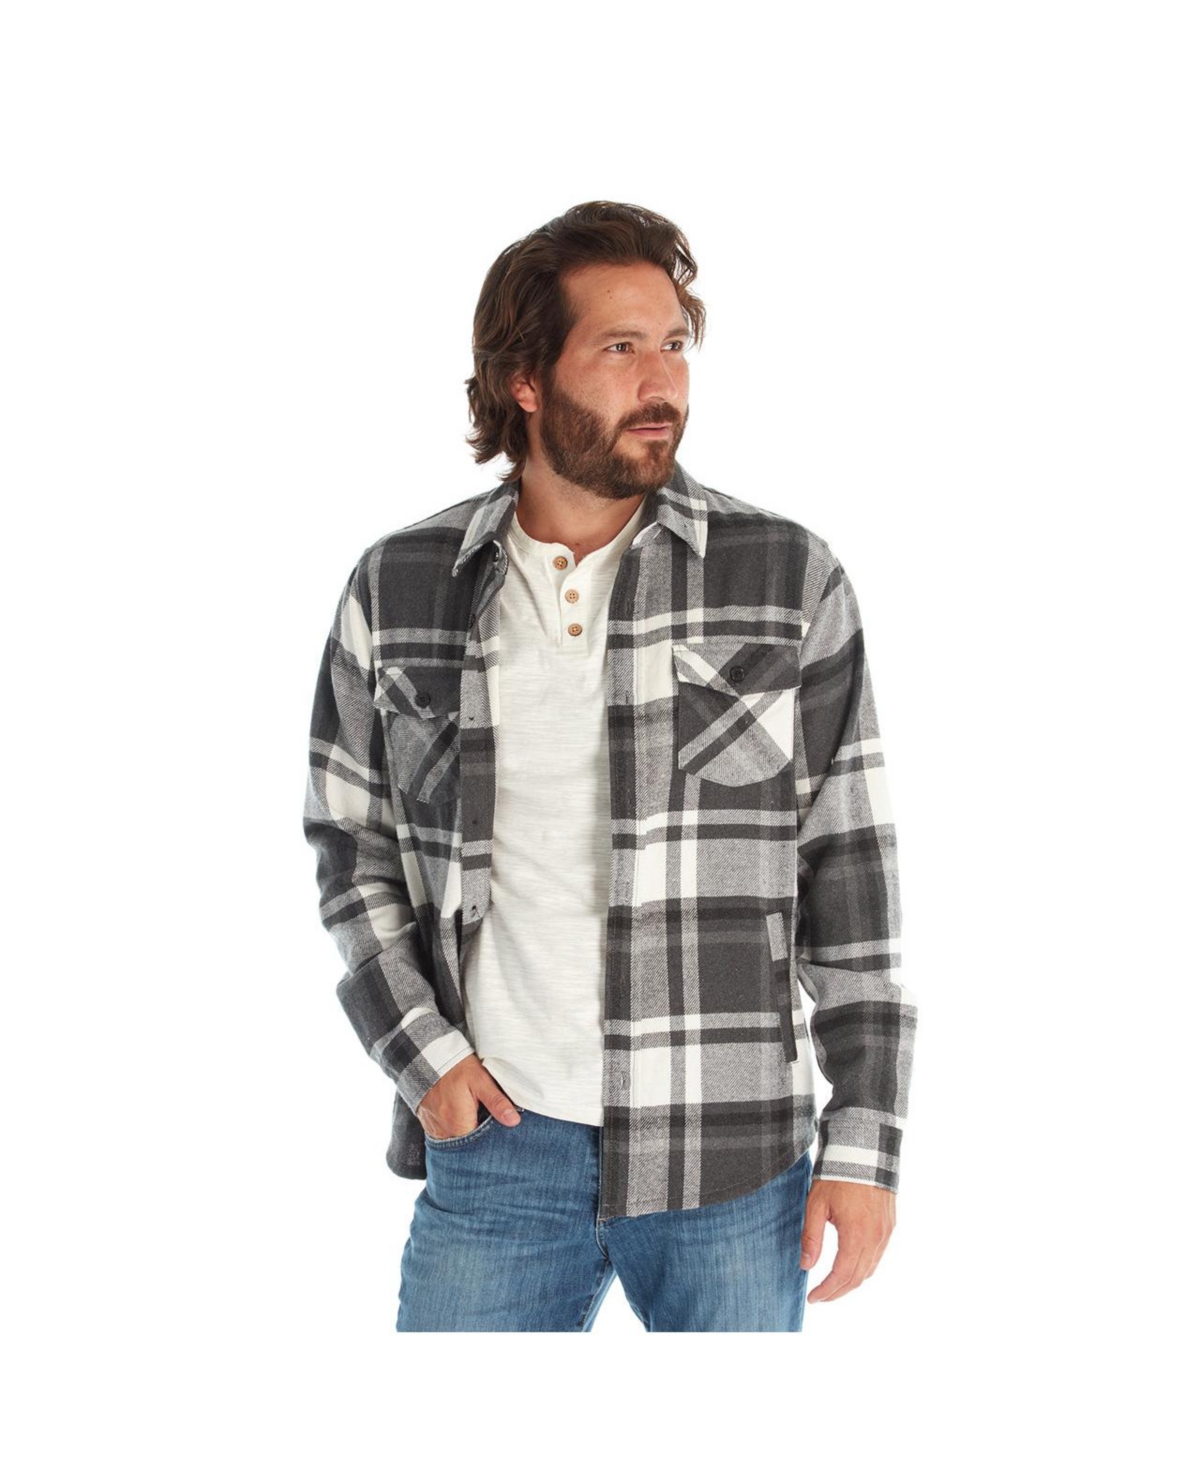 Clothing Men's Long Sleeve Plaid Shirt Jacket - Charcoal